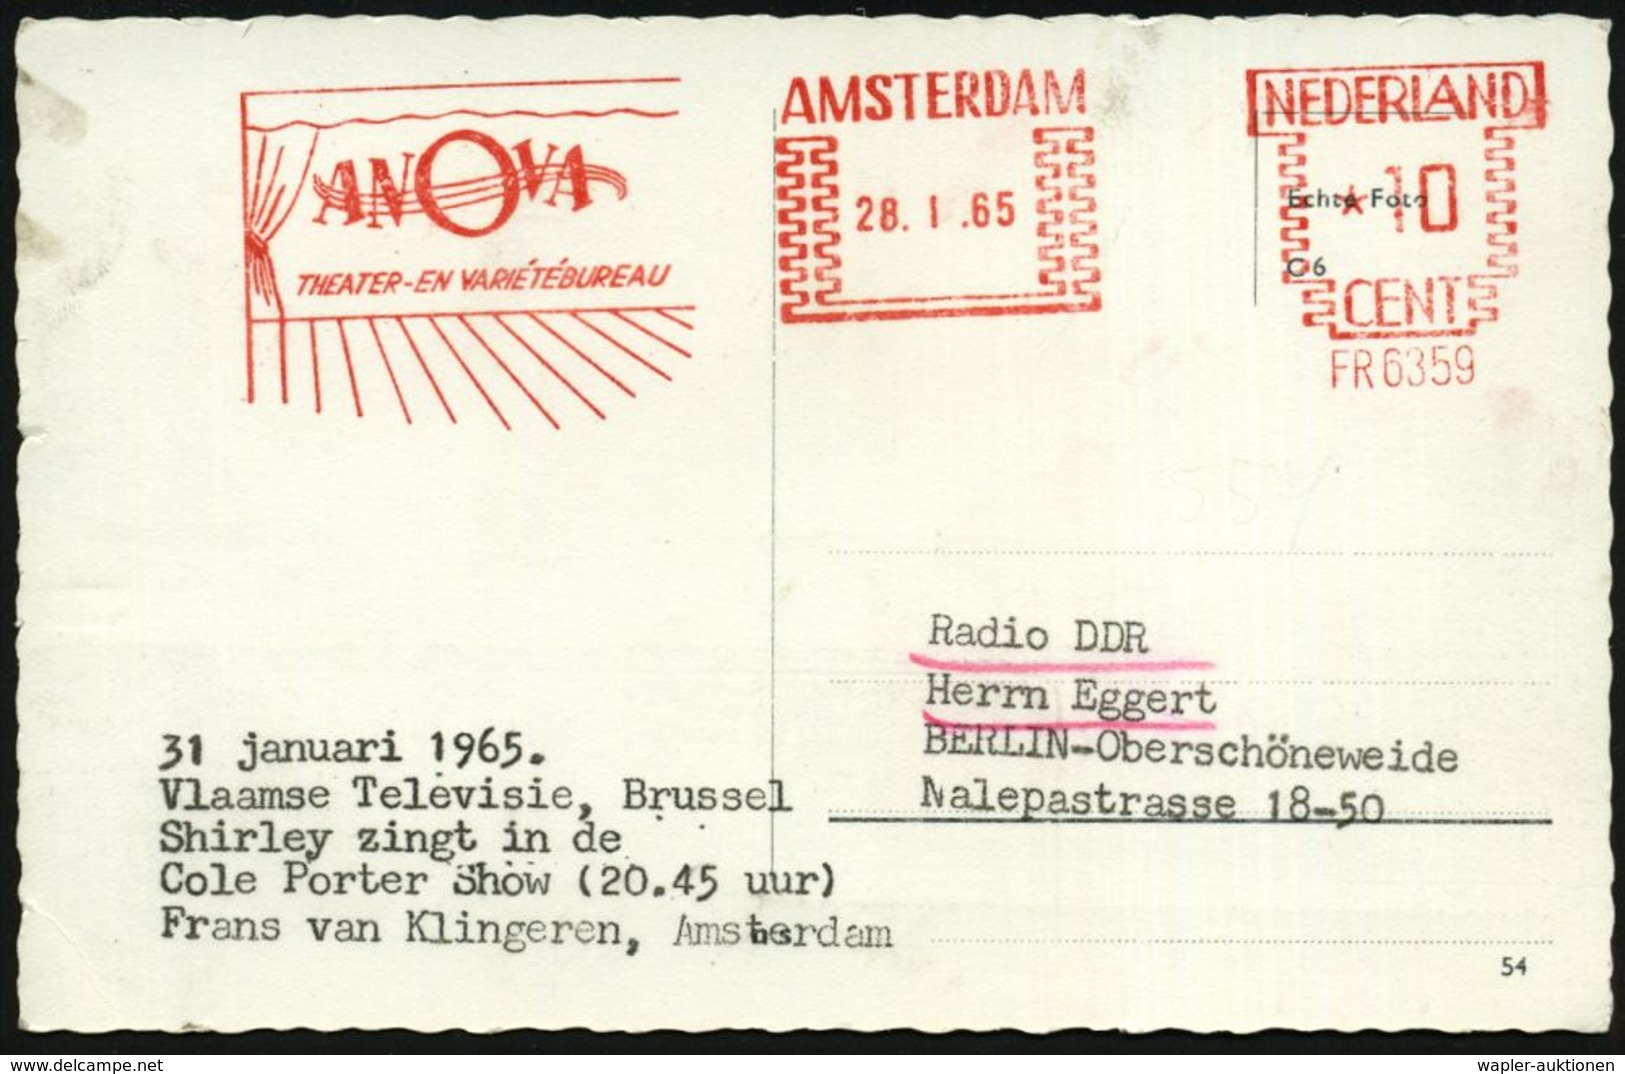 NIEDERLANDE 1965 (28.1.) AFS.: AMSTERDAM/FR 6359/ANOVA/THEATER-EN VARIETEBUREAU (Bühne) Bedarfs-Ausl.-Ak. "Cole Porter S - Circus